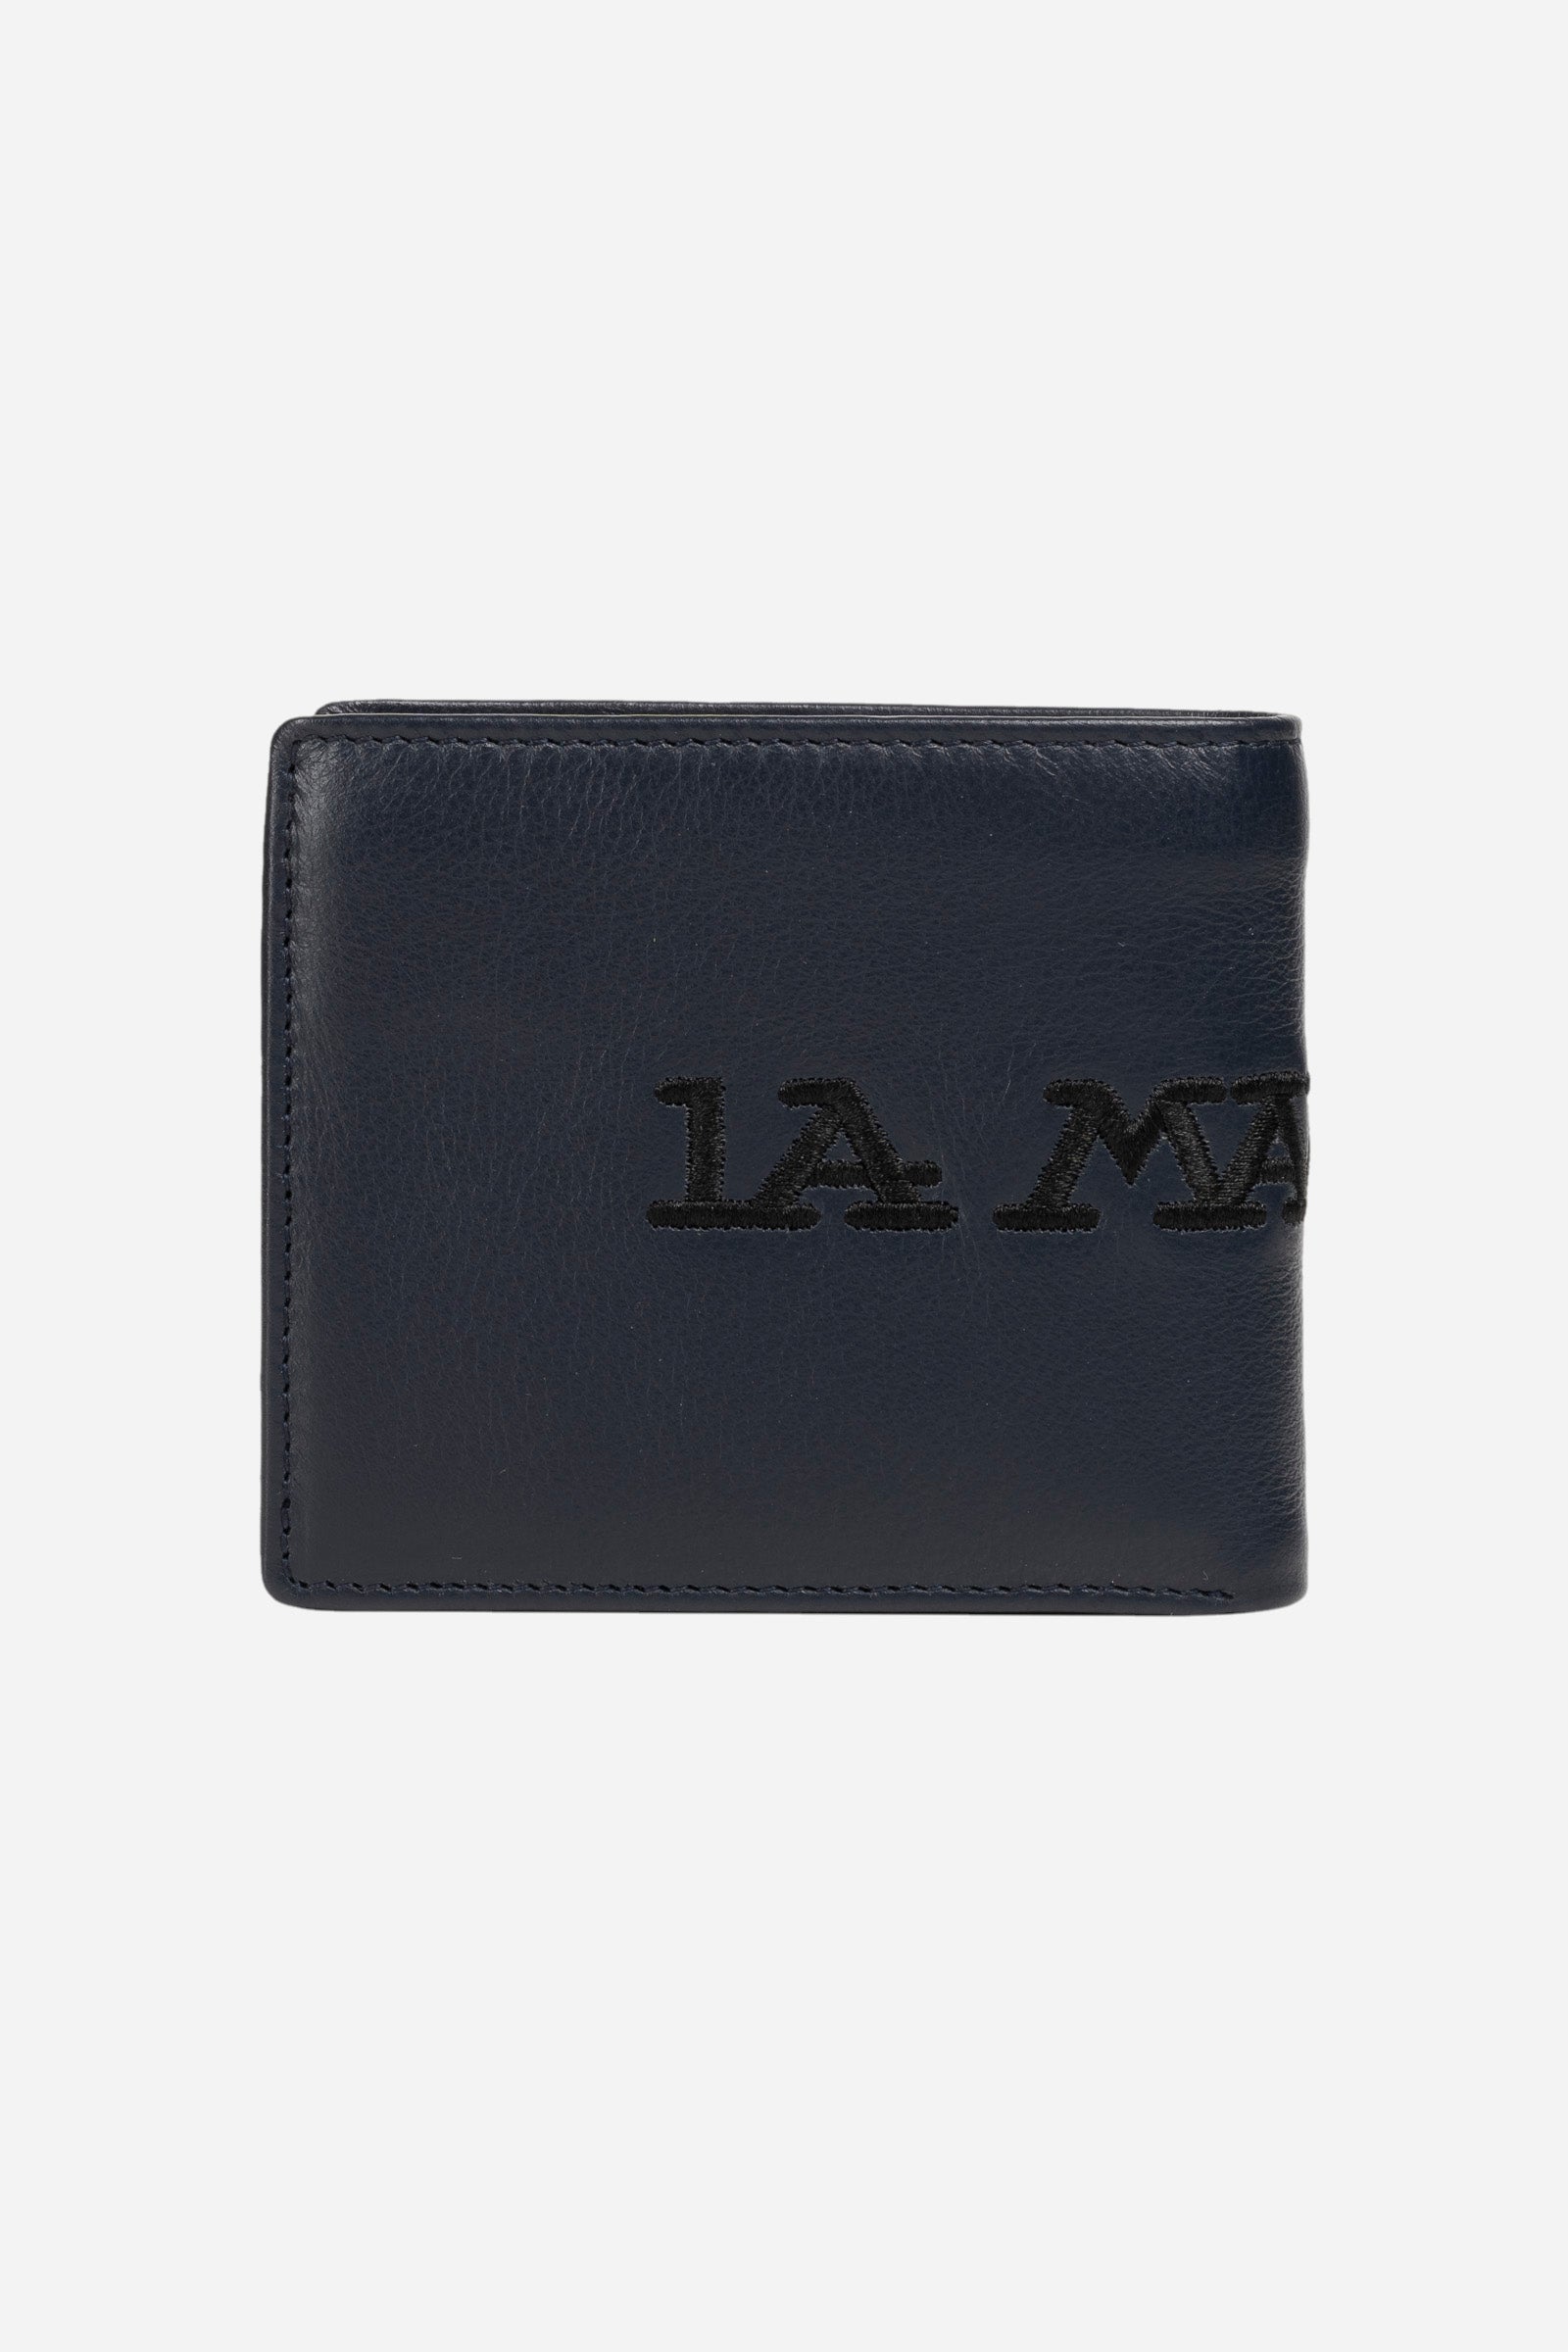 Leather wallet - Lopez